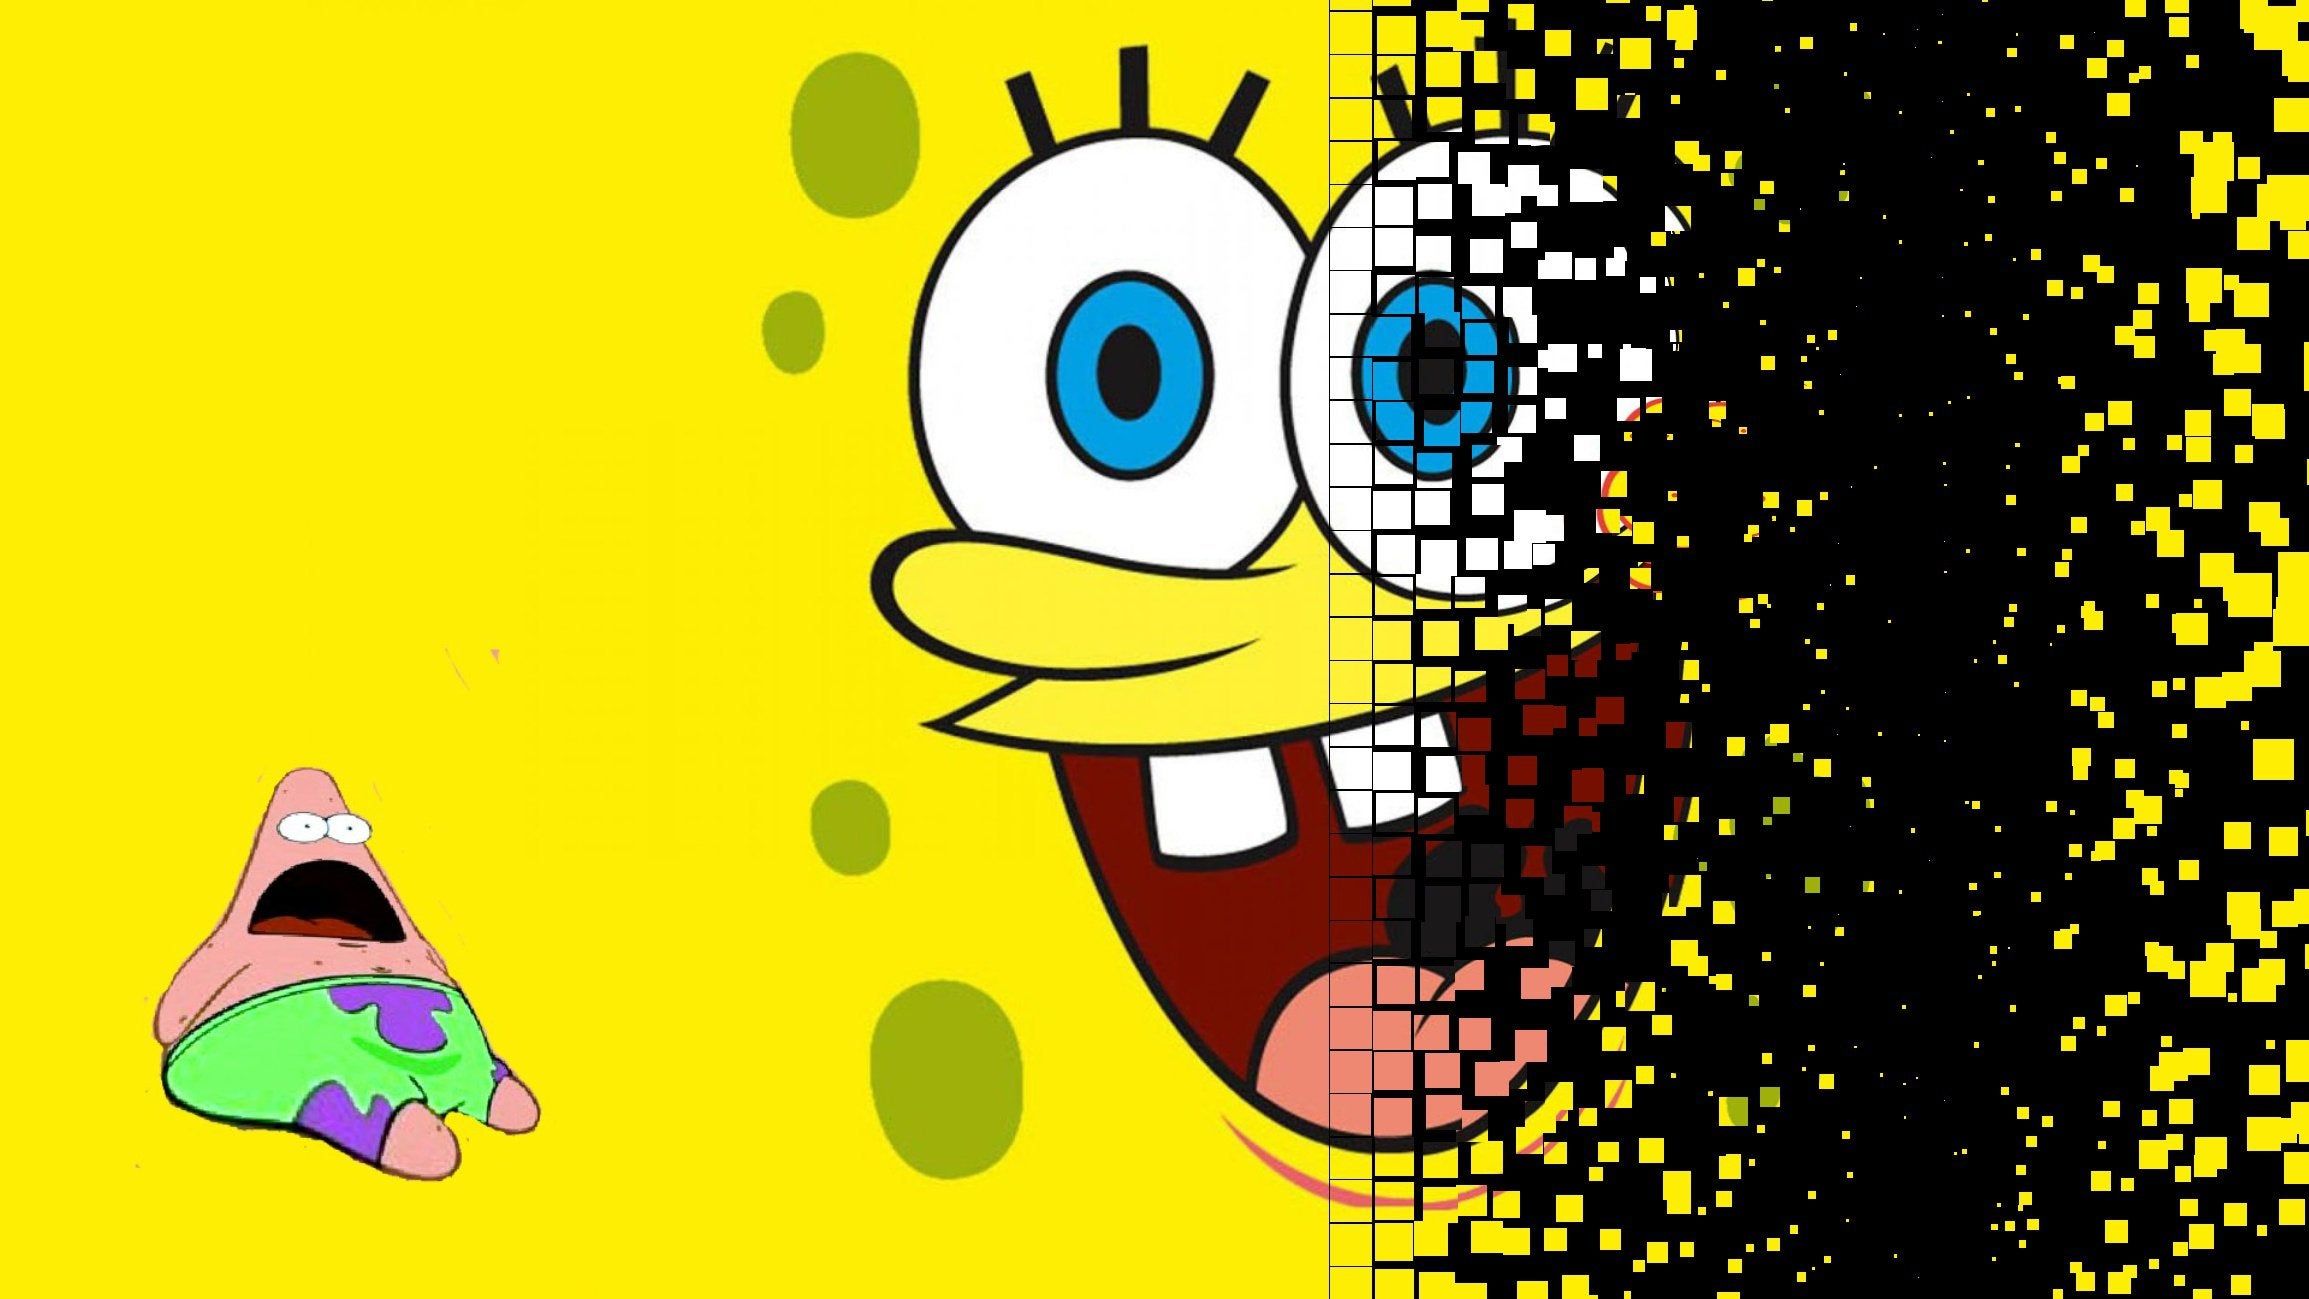 SpongeBob and Patrick